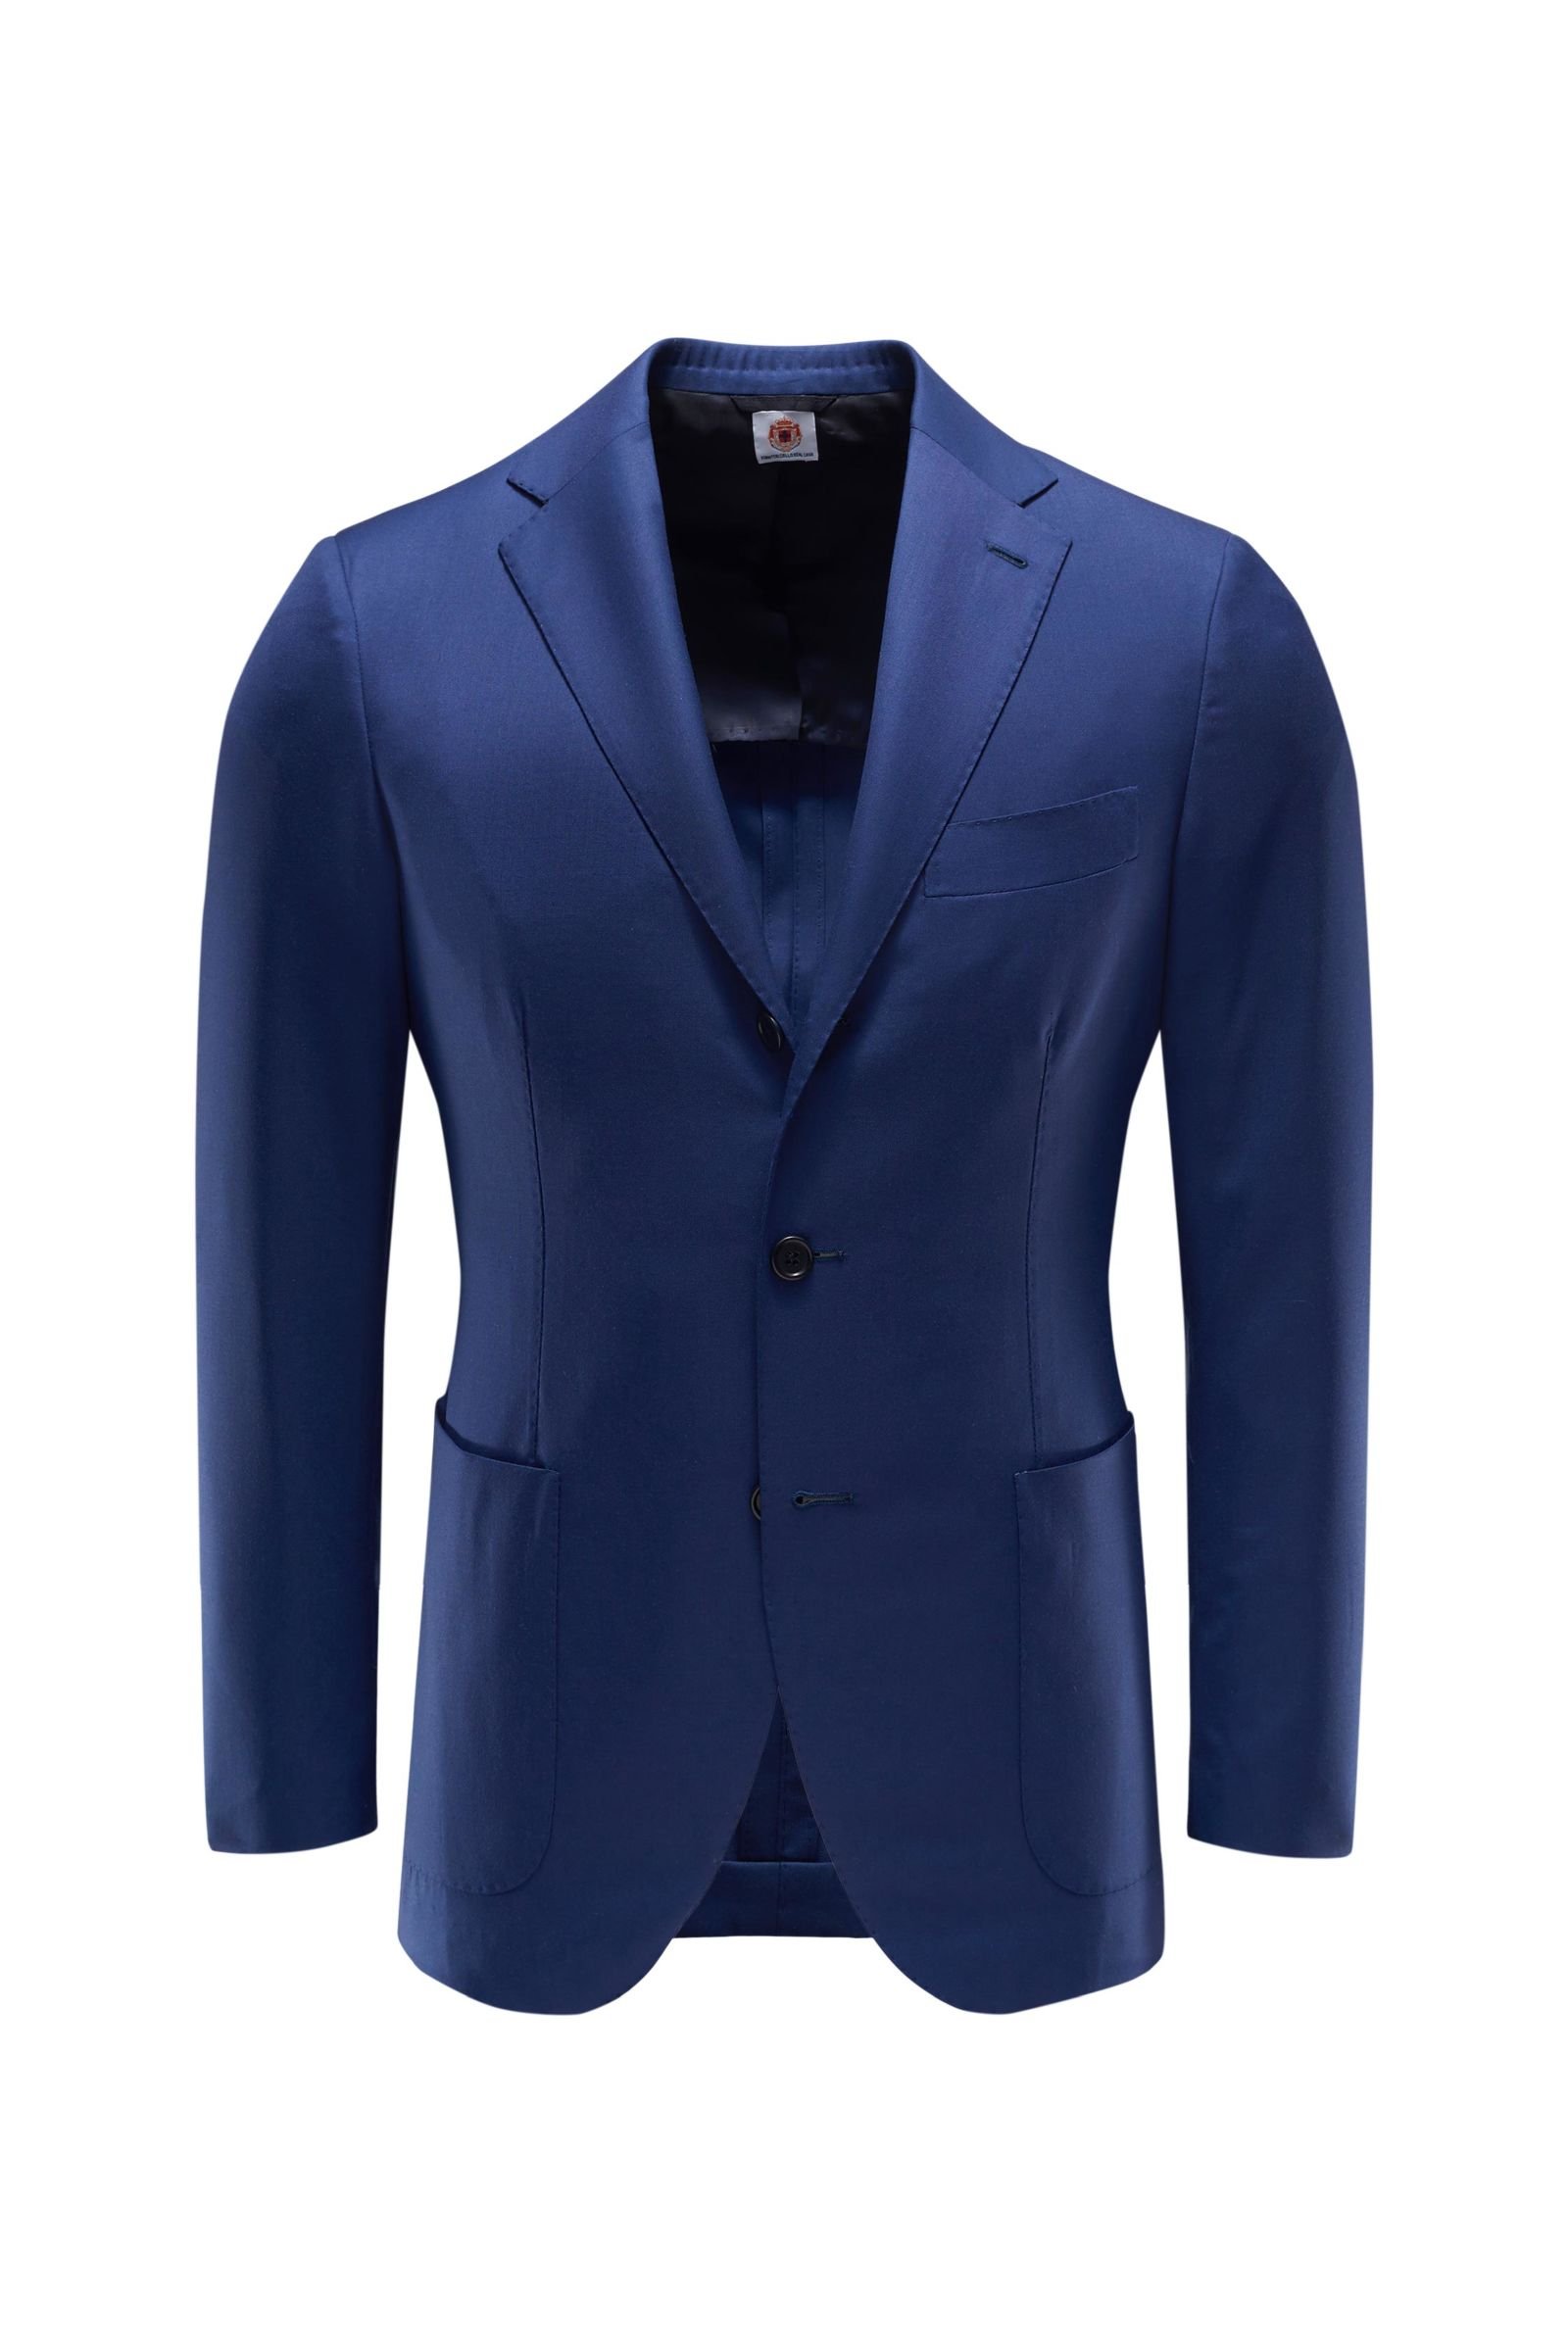 Smart-casual jacket 'Salina' dark blue